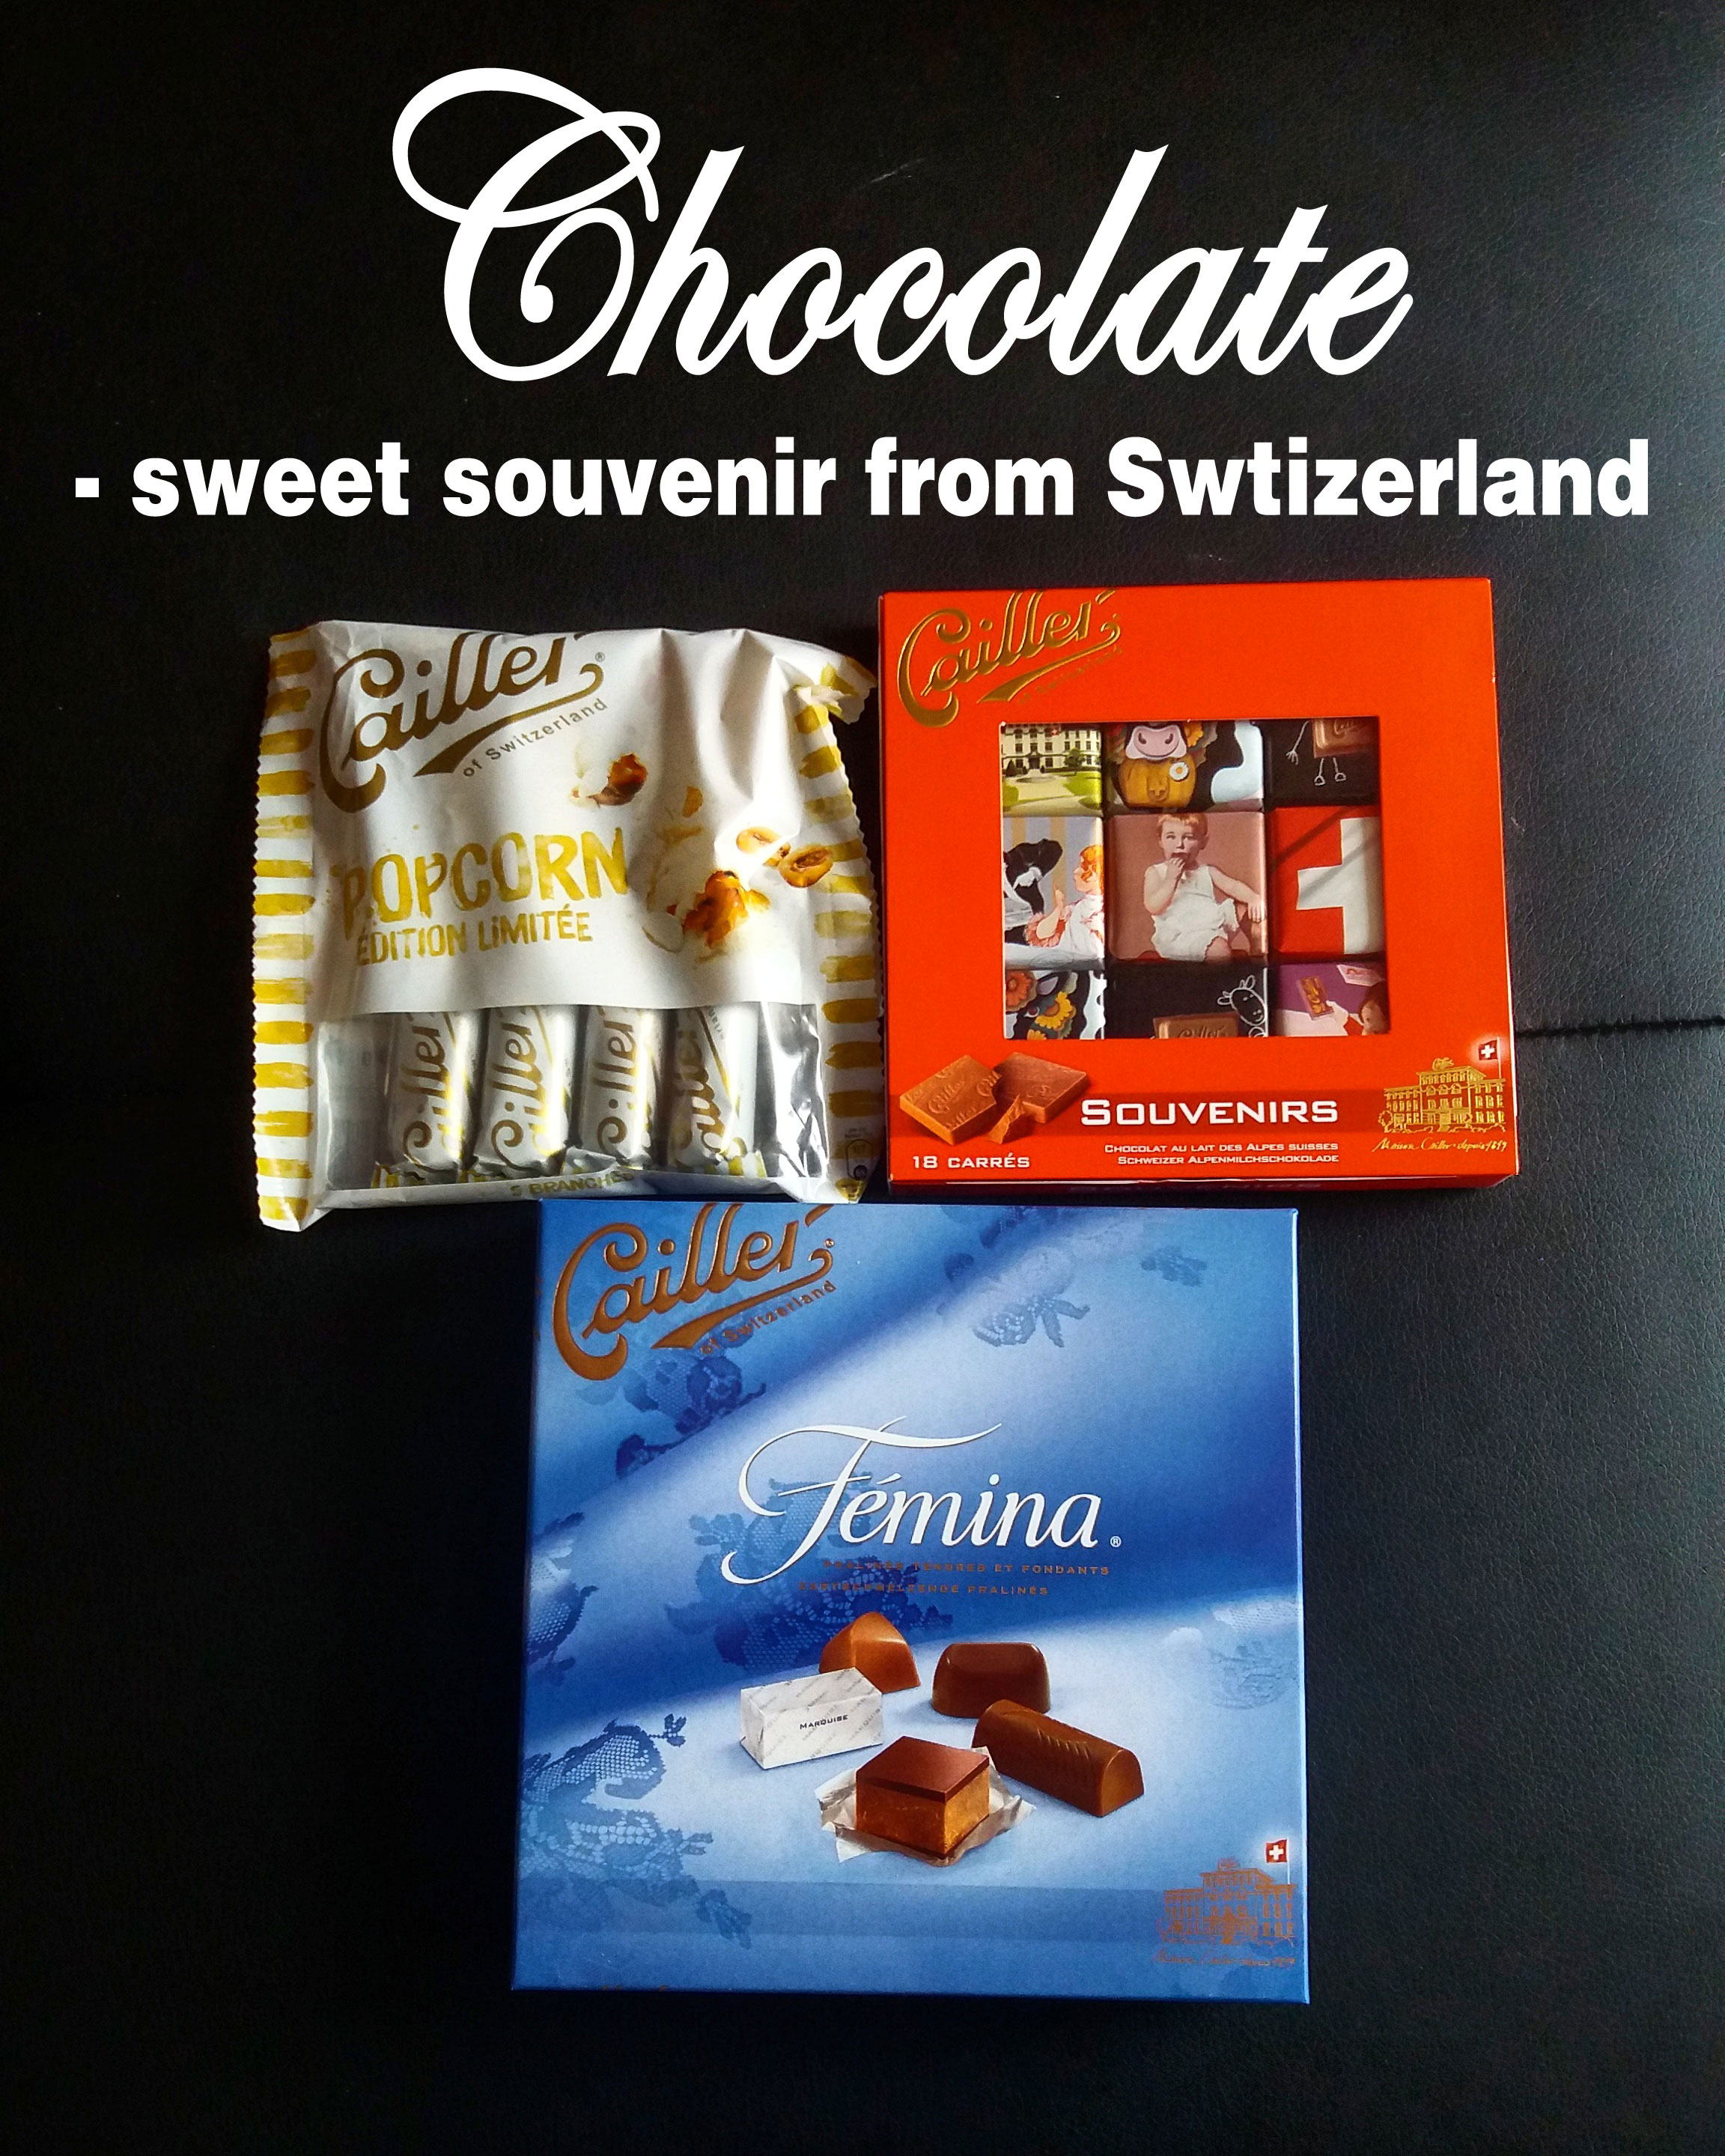 Chocolate - sweet souvenir from Switzerland